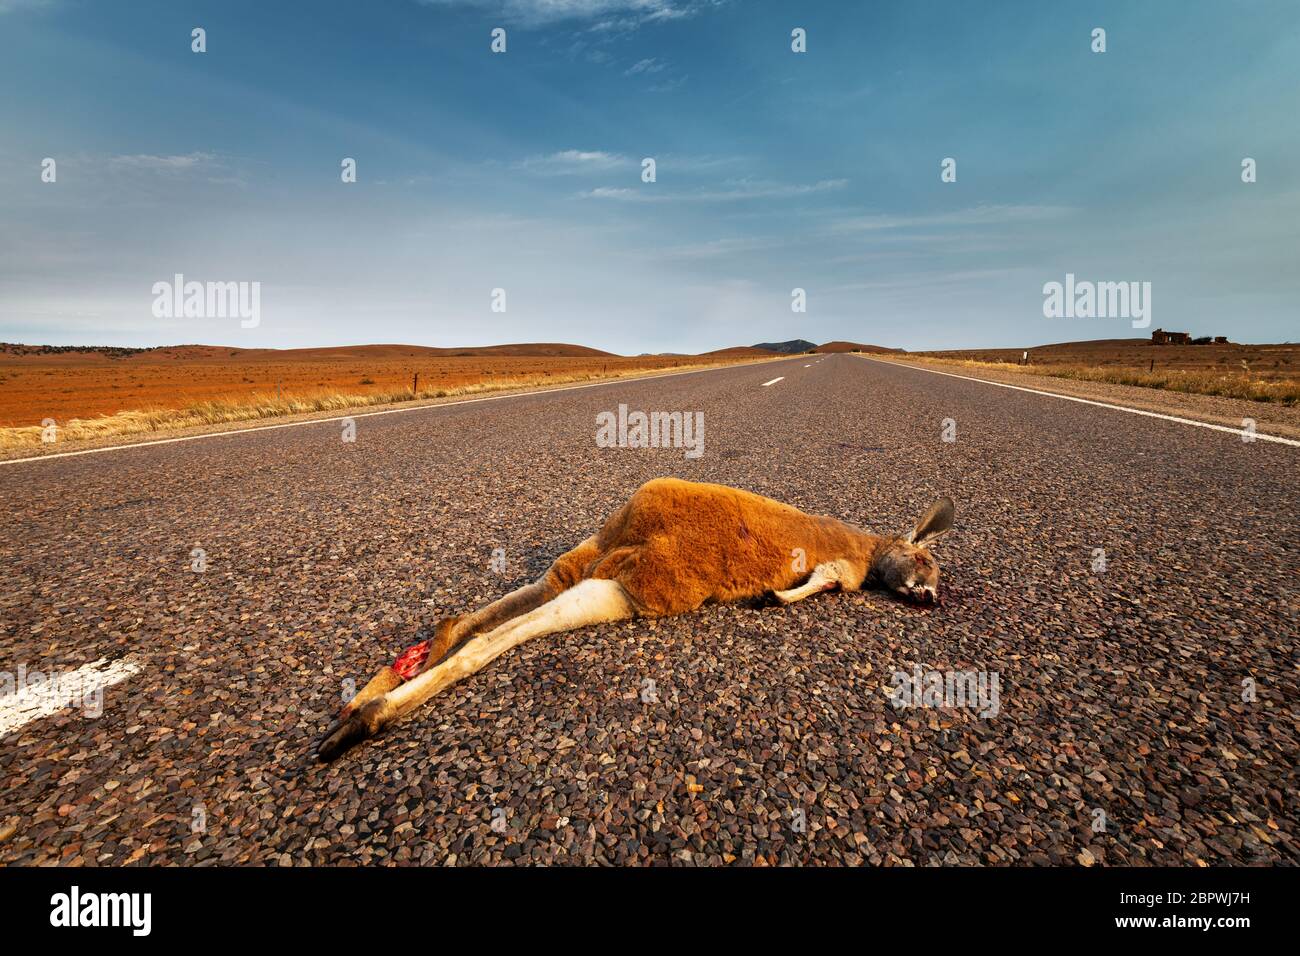 Typical scene seen daily on Australia's roads. Stock Photo